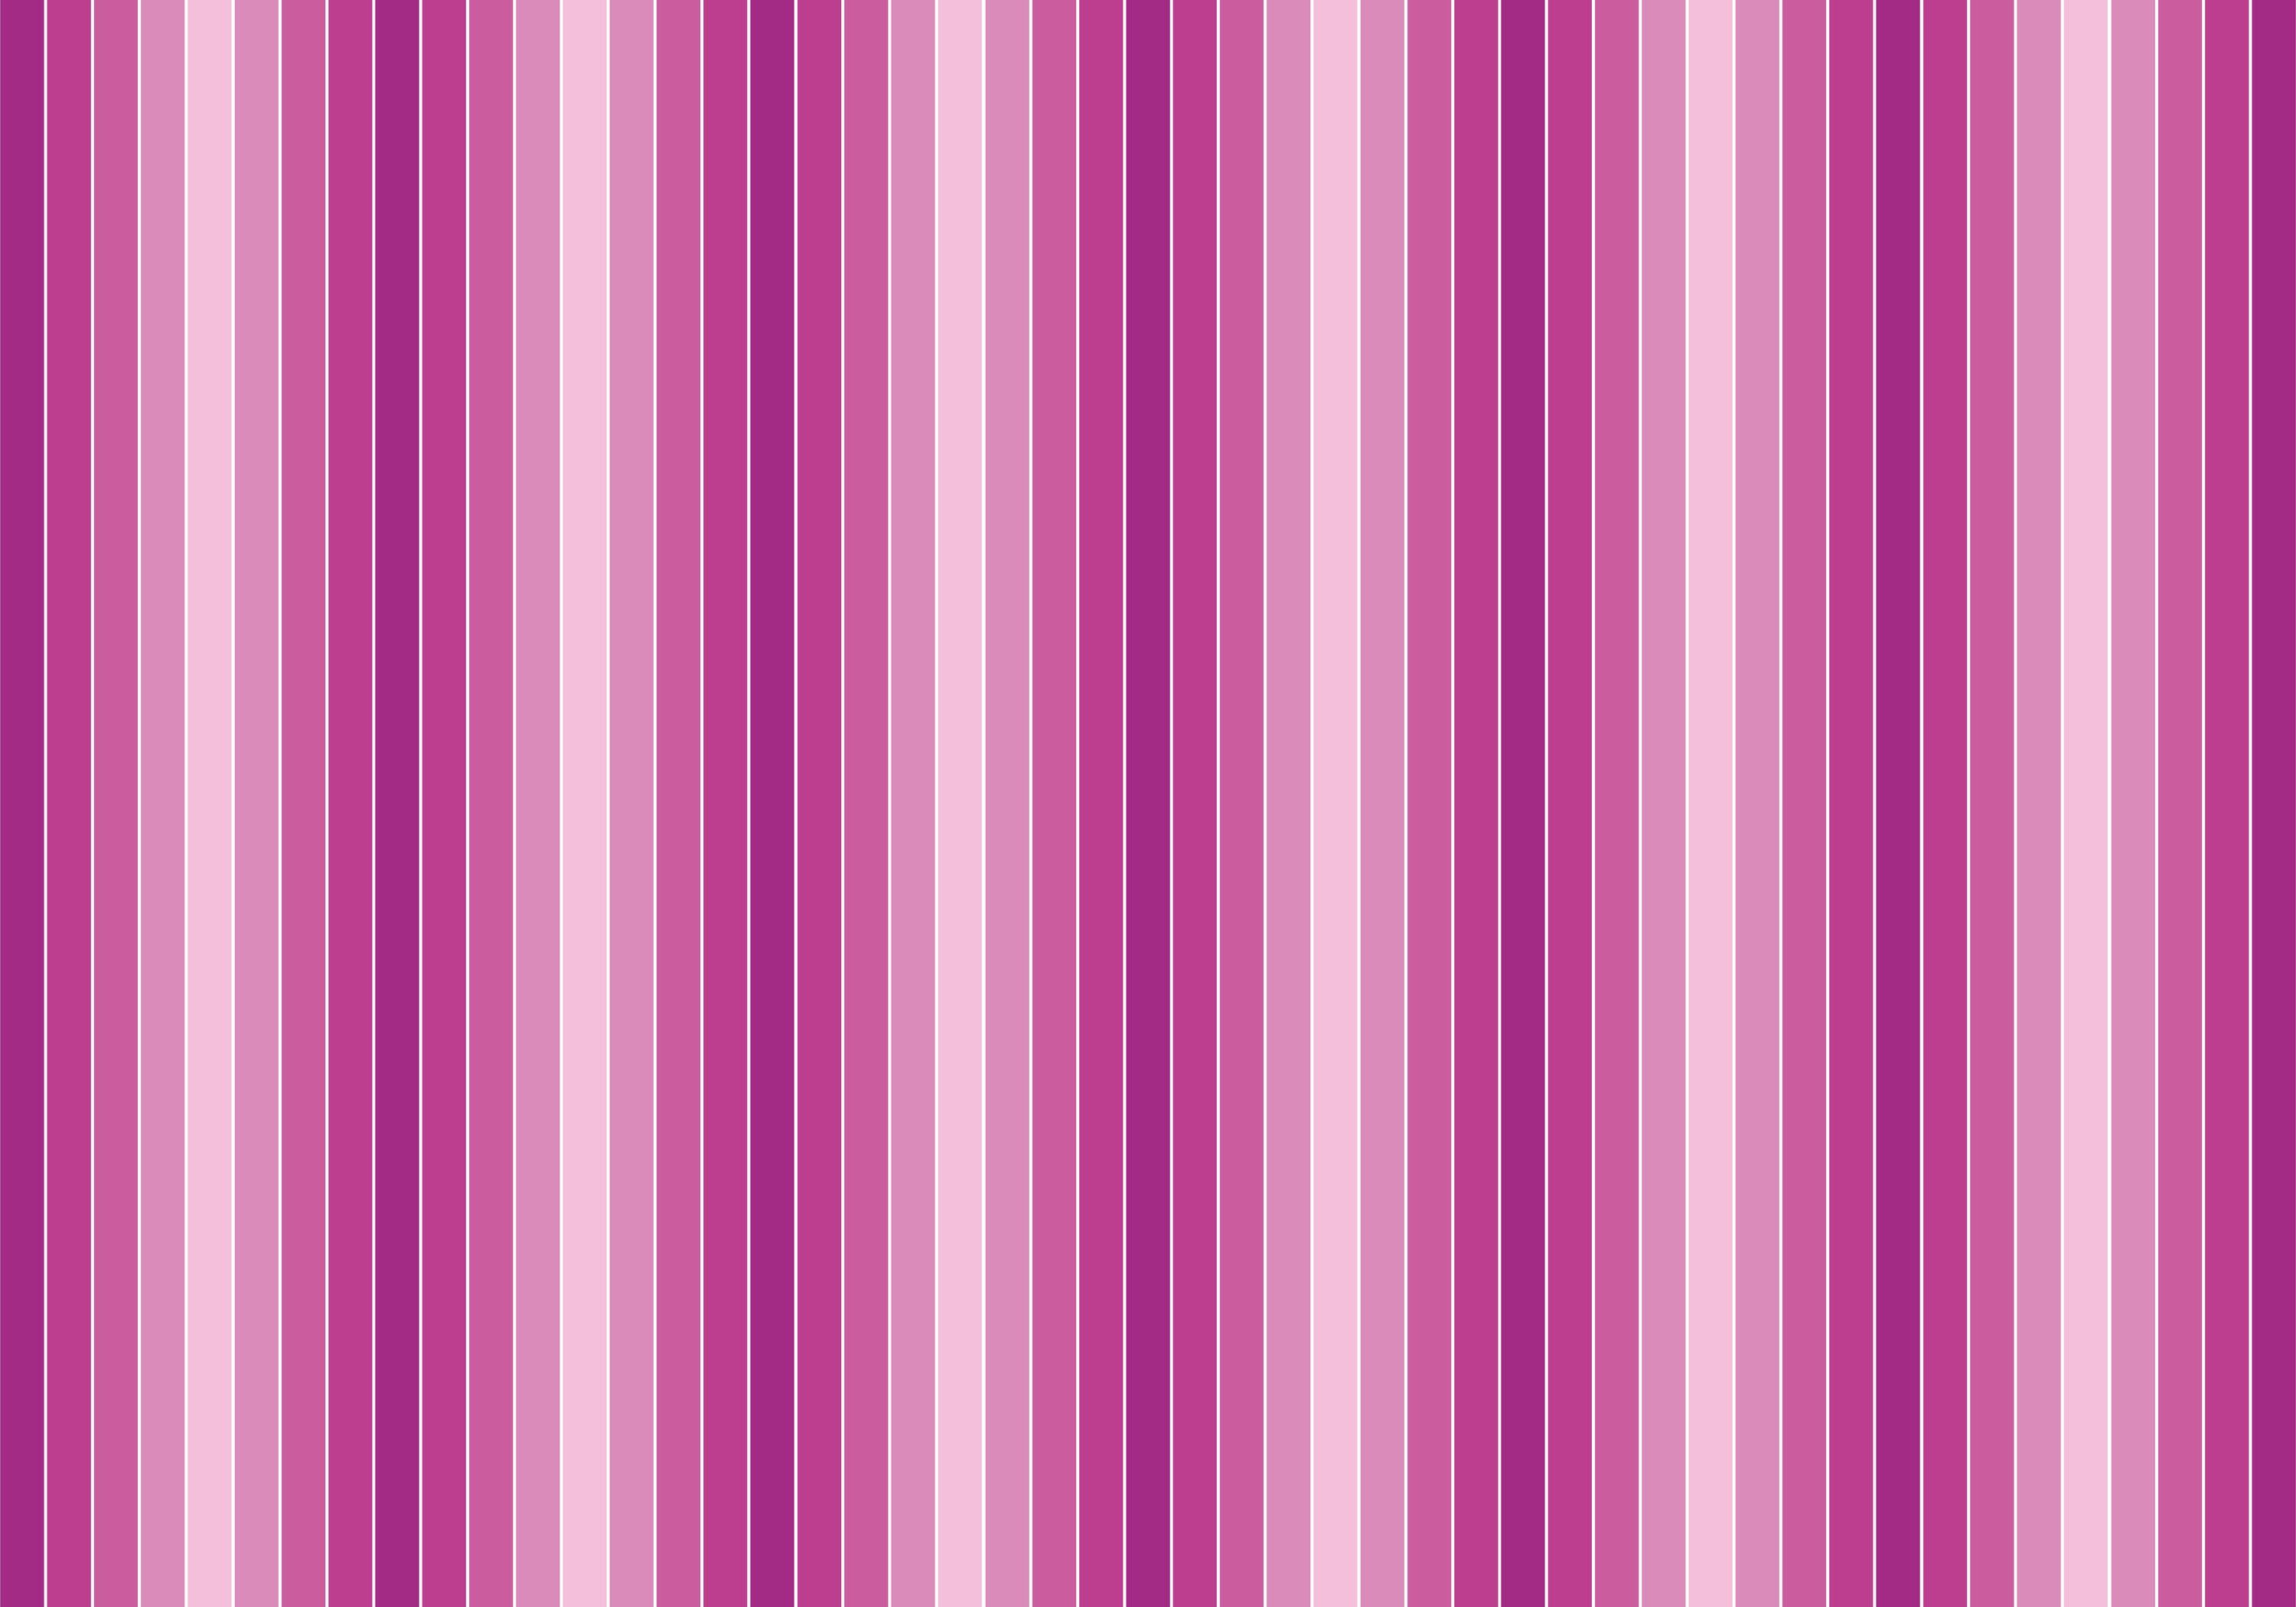 wandmotiv24 Fototapete Pink Muster, glatt, Wandtapete, Motivtapete, matt, Vliestapete